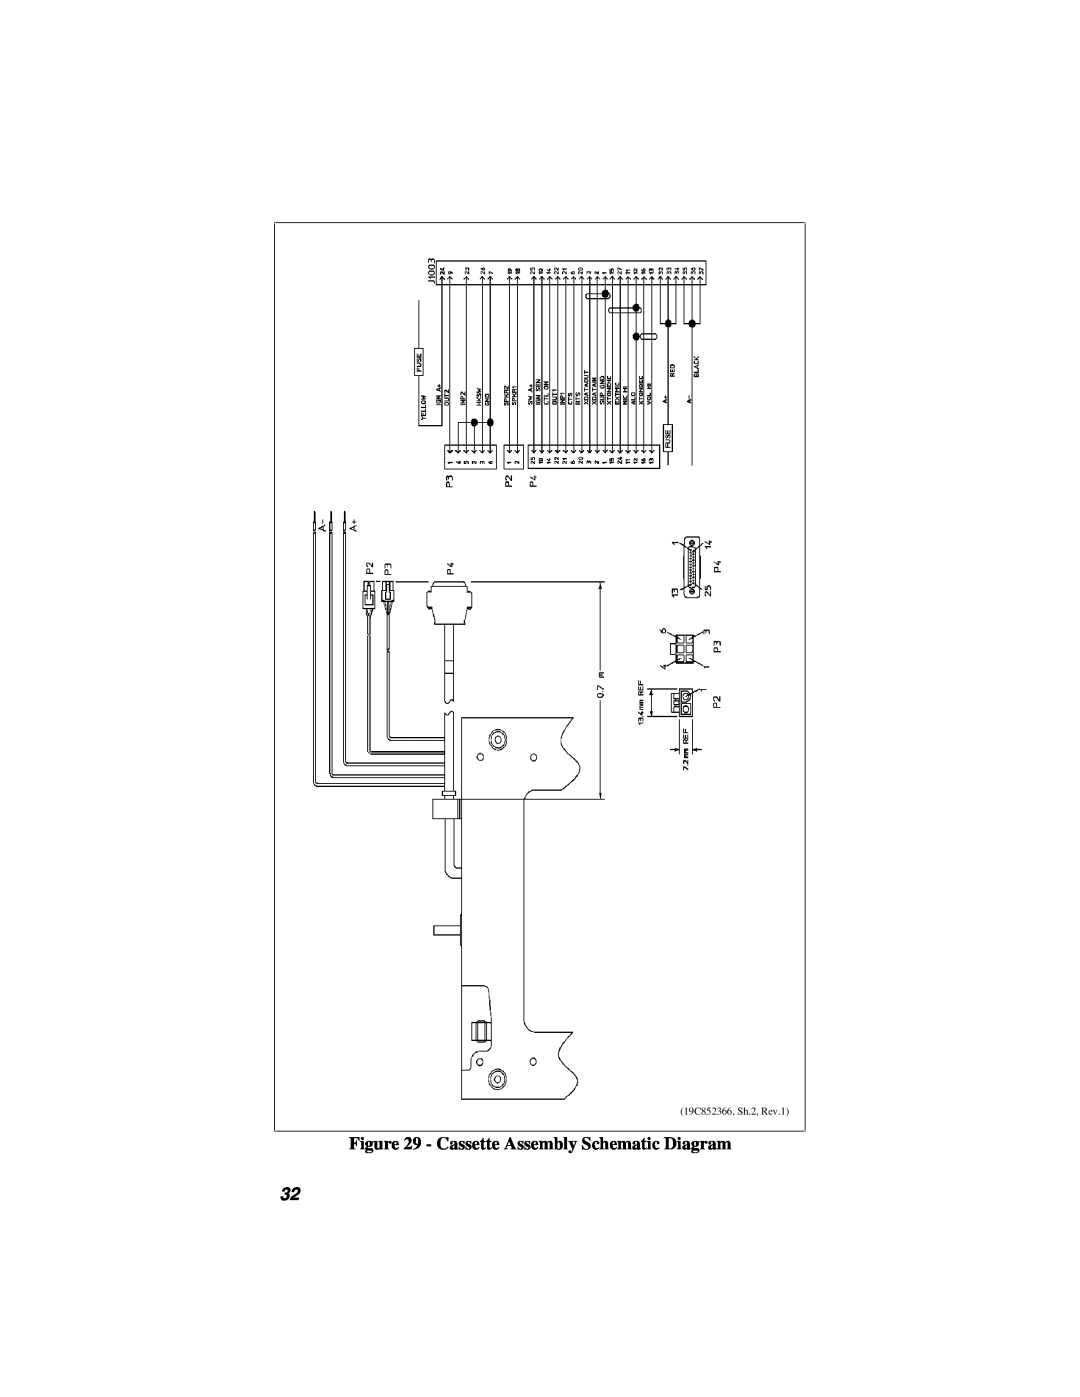 Ericsson 38901E installation manual Cassette Assembly Schematic Diagram, 19C852366, Sh.2, Rev.1 